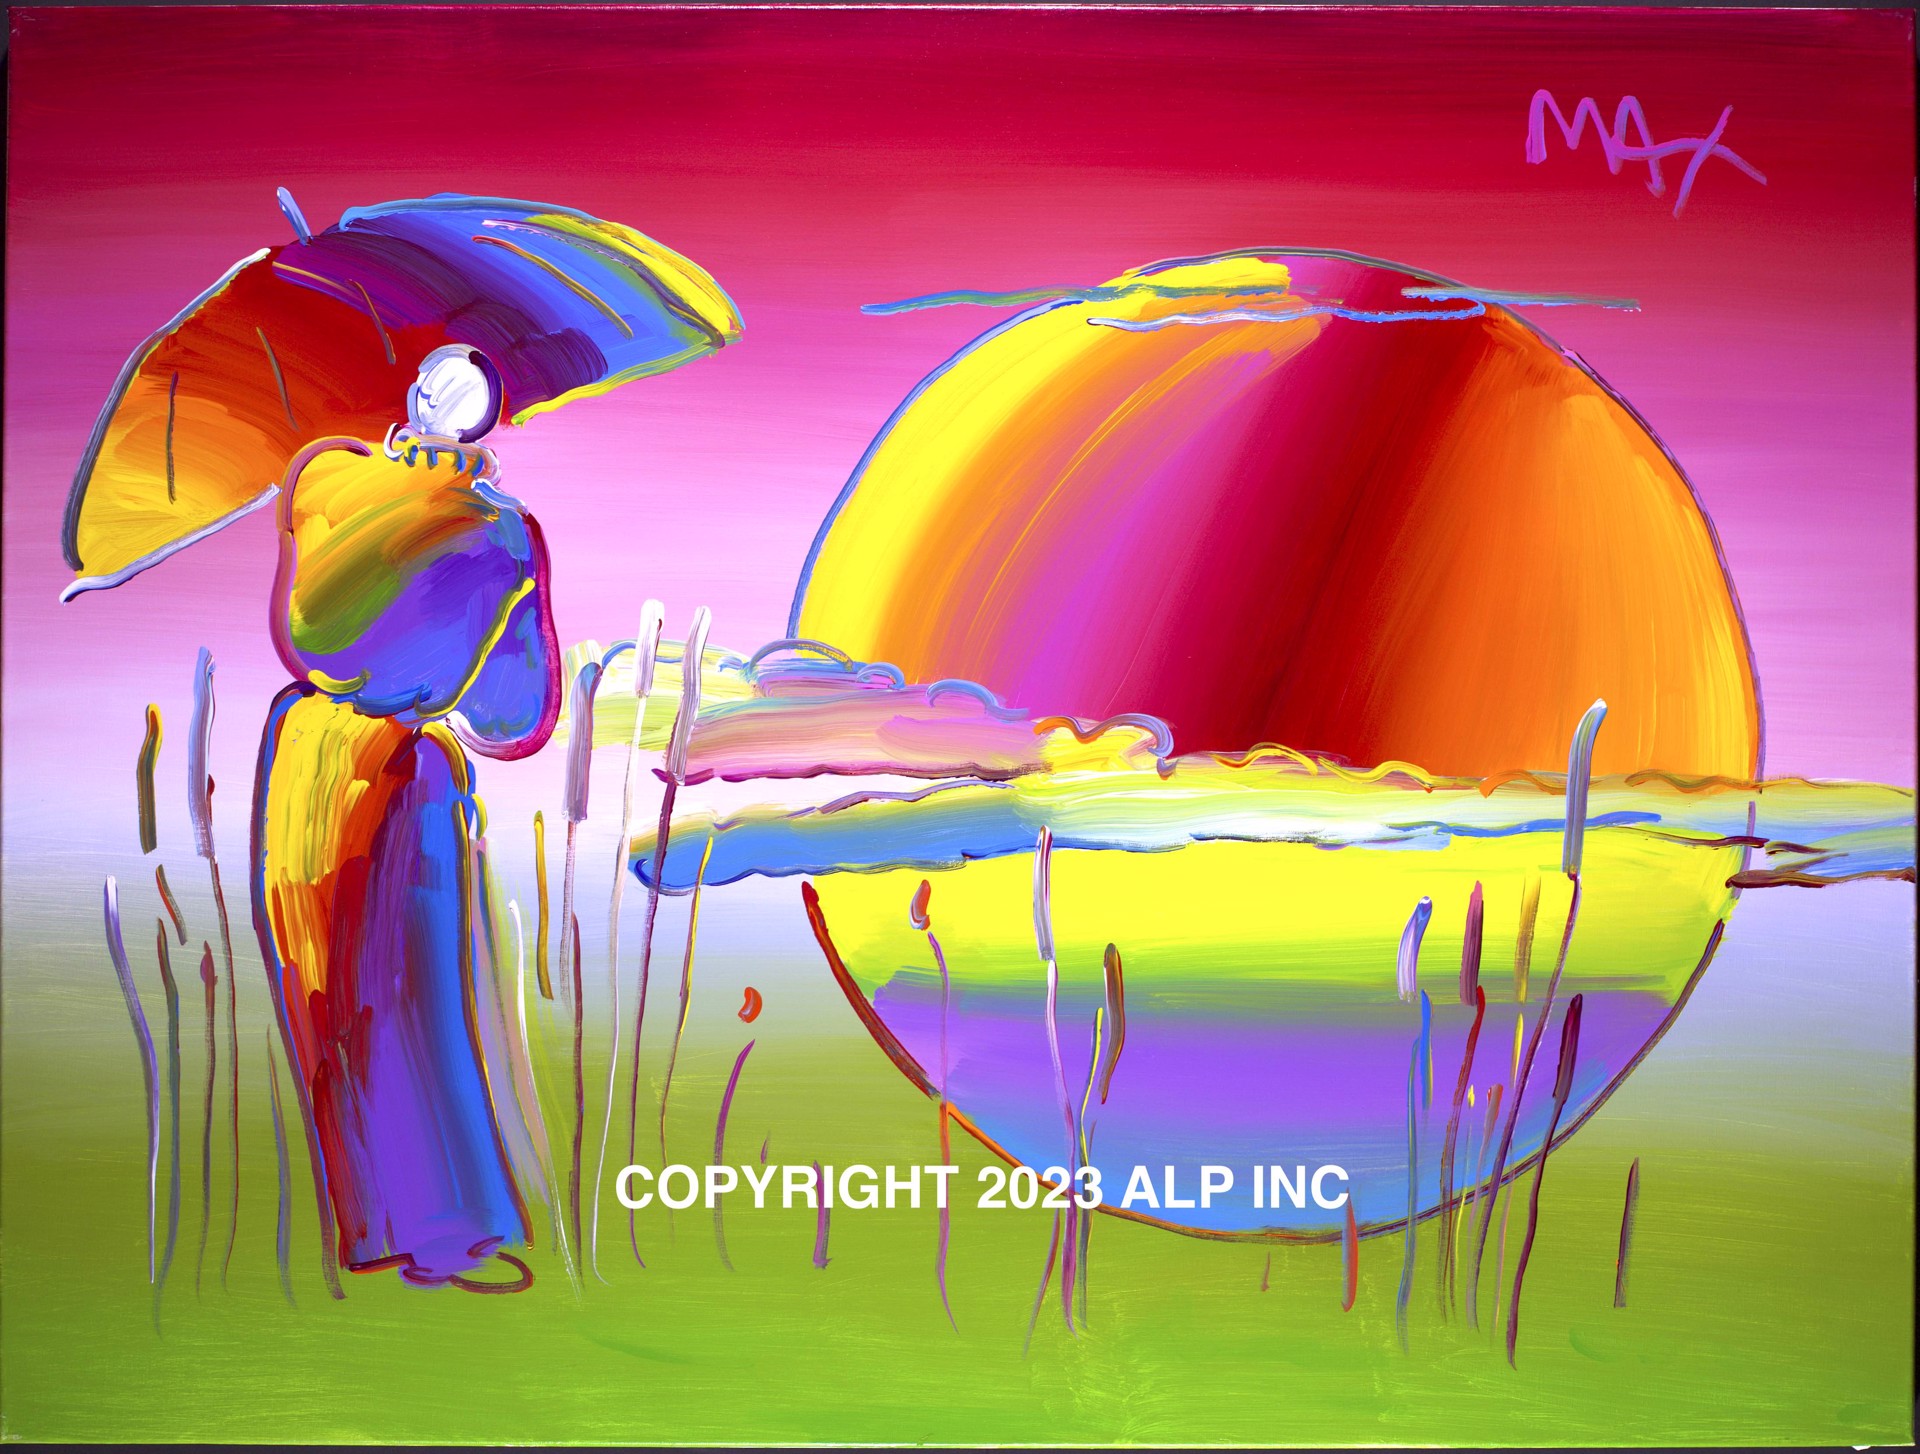 Rainbow Umbrella Man by Peter Max